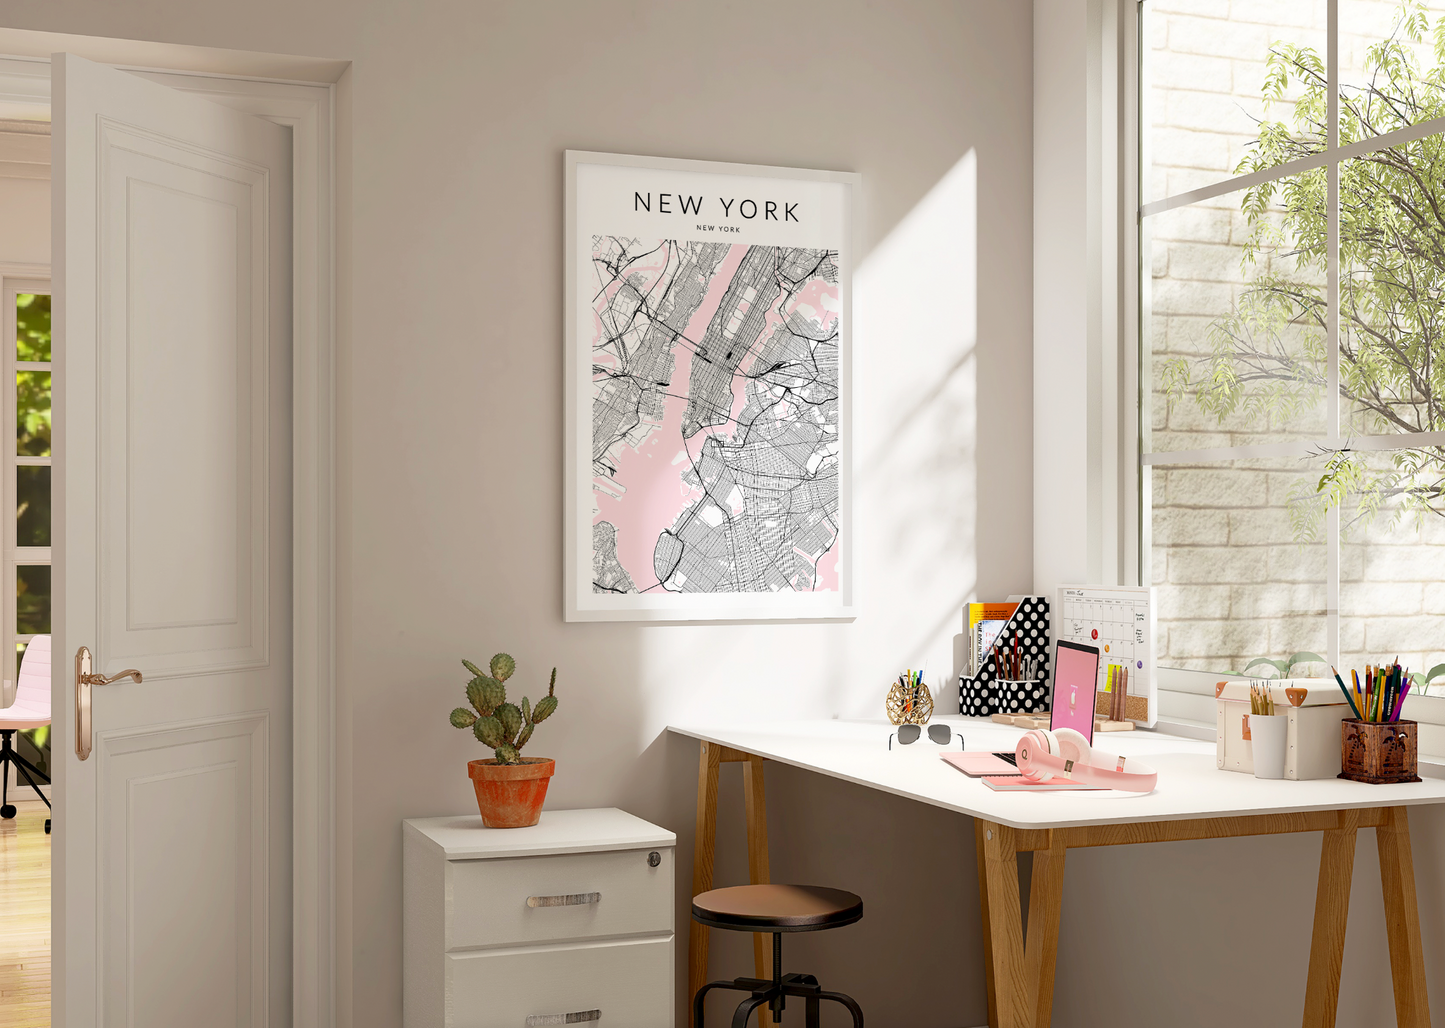 New York Minimalist Map Print